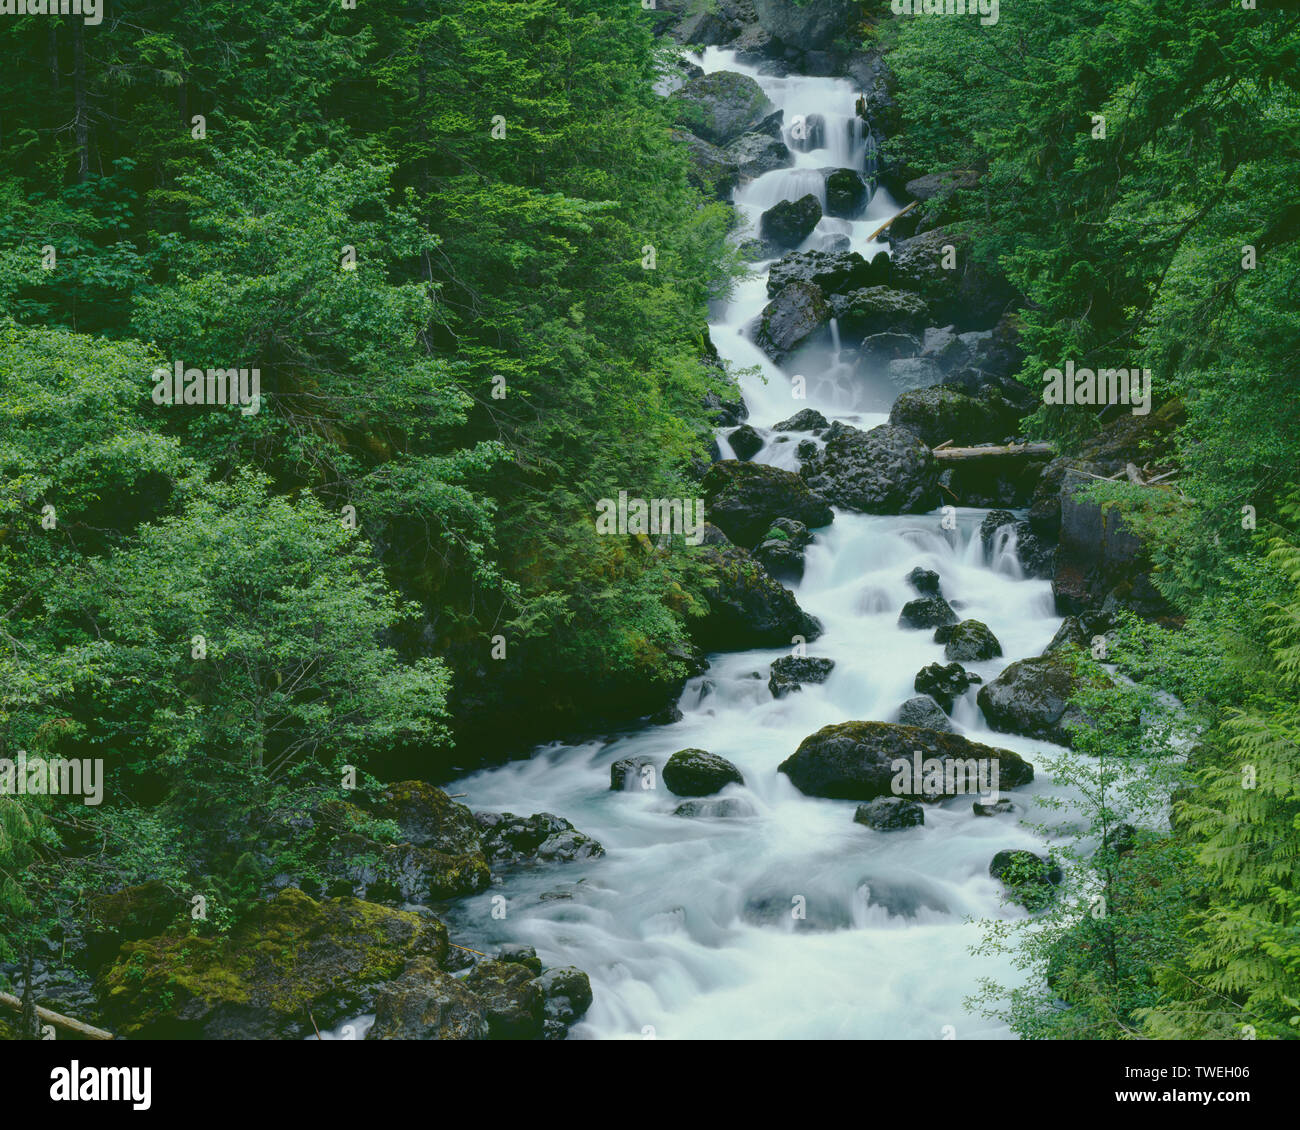 USA, Washington, Olympic National Park, Spring runoff fills the Dosewallips River. Stock Photo